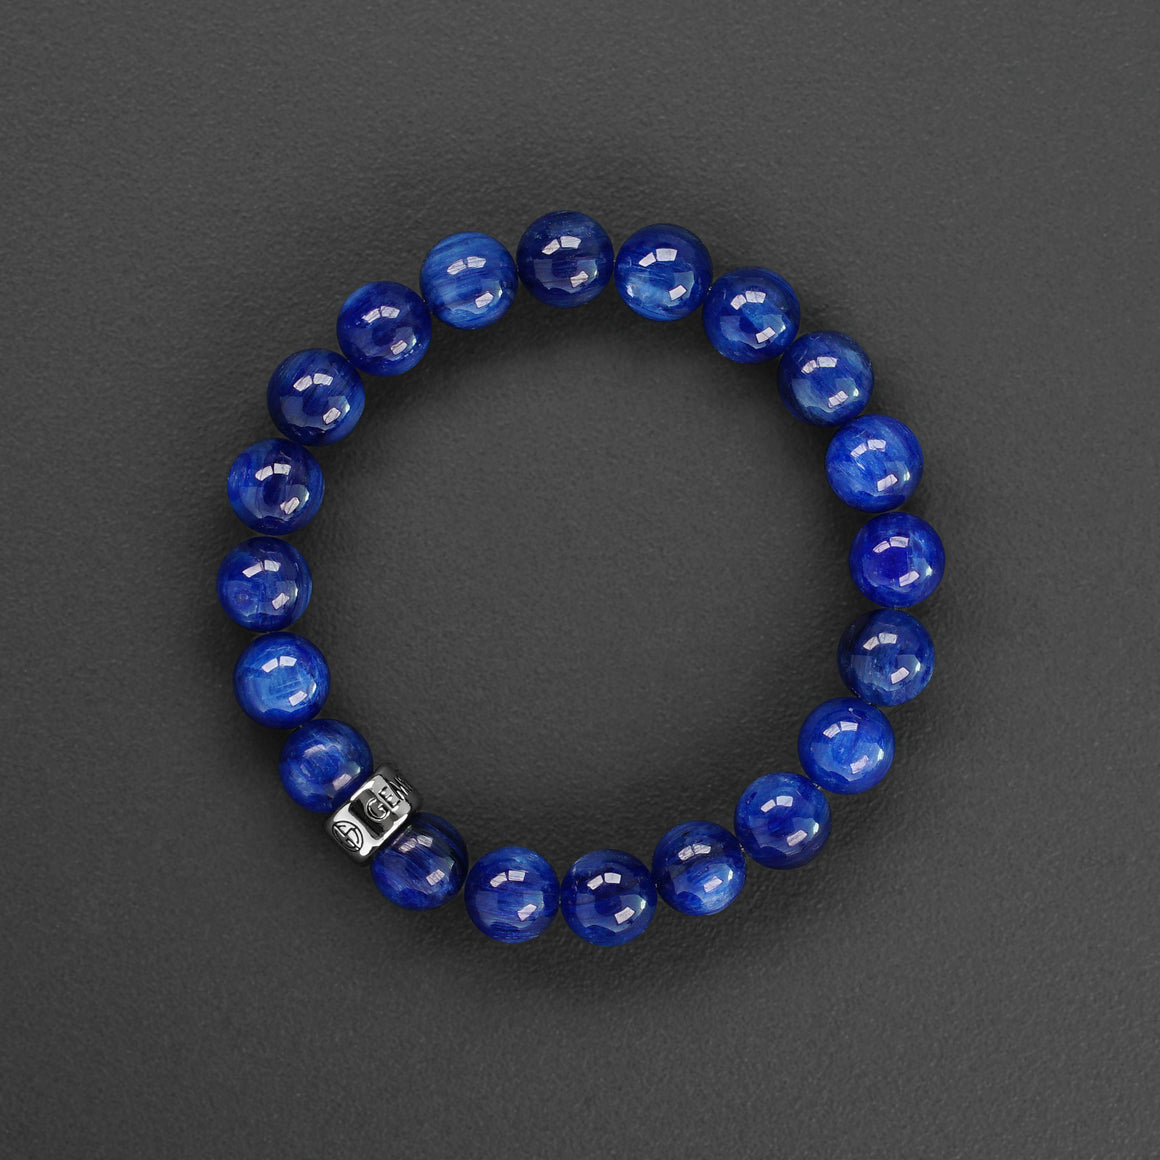 Blue Kyanite gemstone bracelet with silver charm by Gems In Style Jewellery.